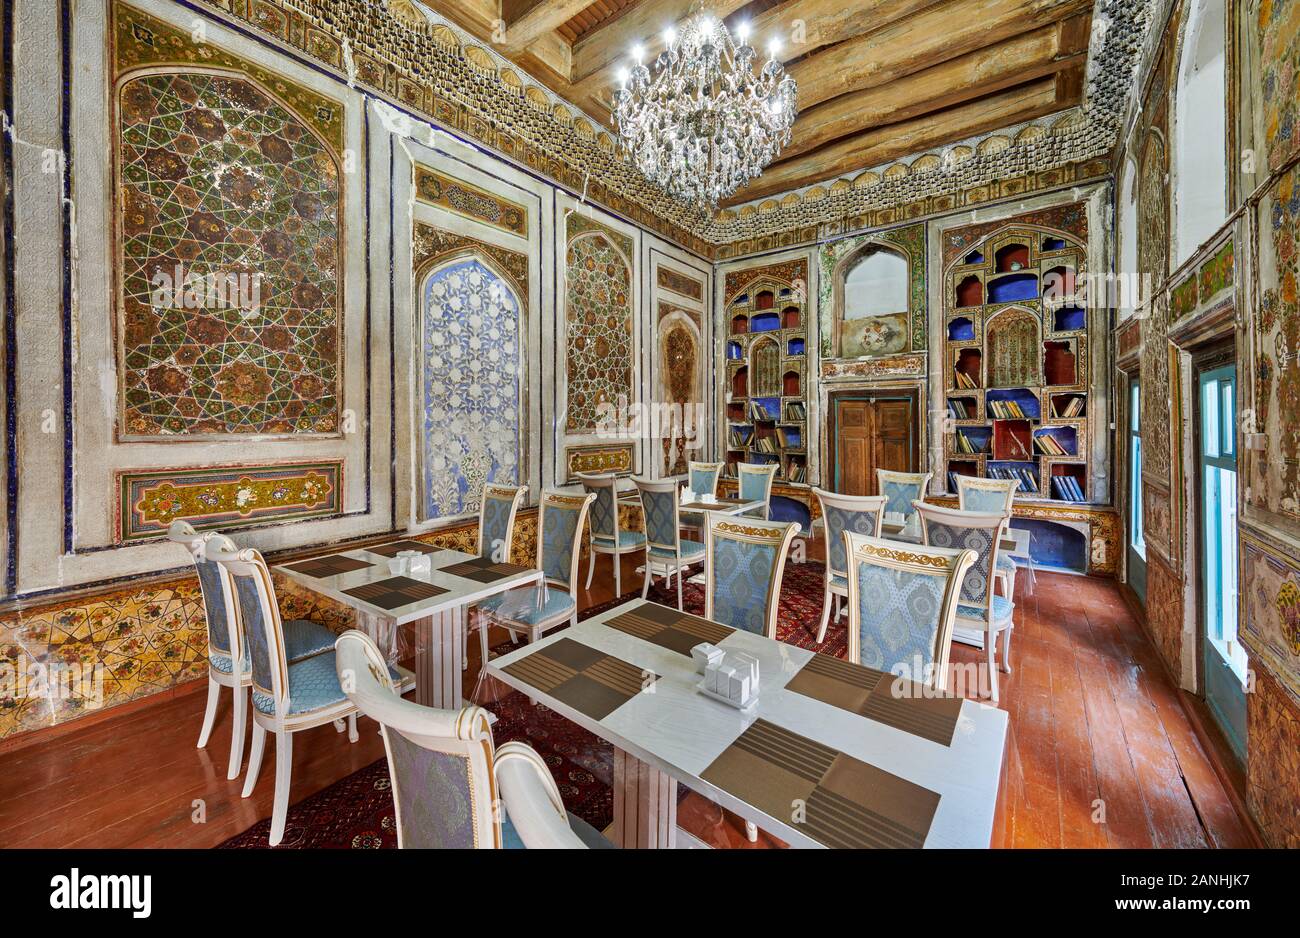 Ornate Decoration Inside an old Jewish home, Jewish decorated room, Bukhara, Uzbekistan, Central Asia Stock Photo